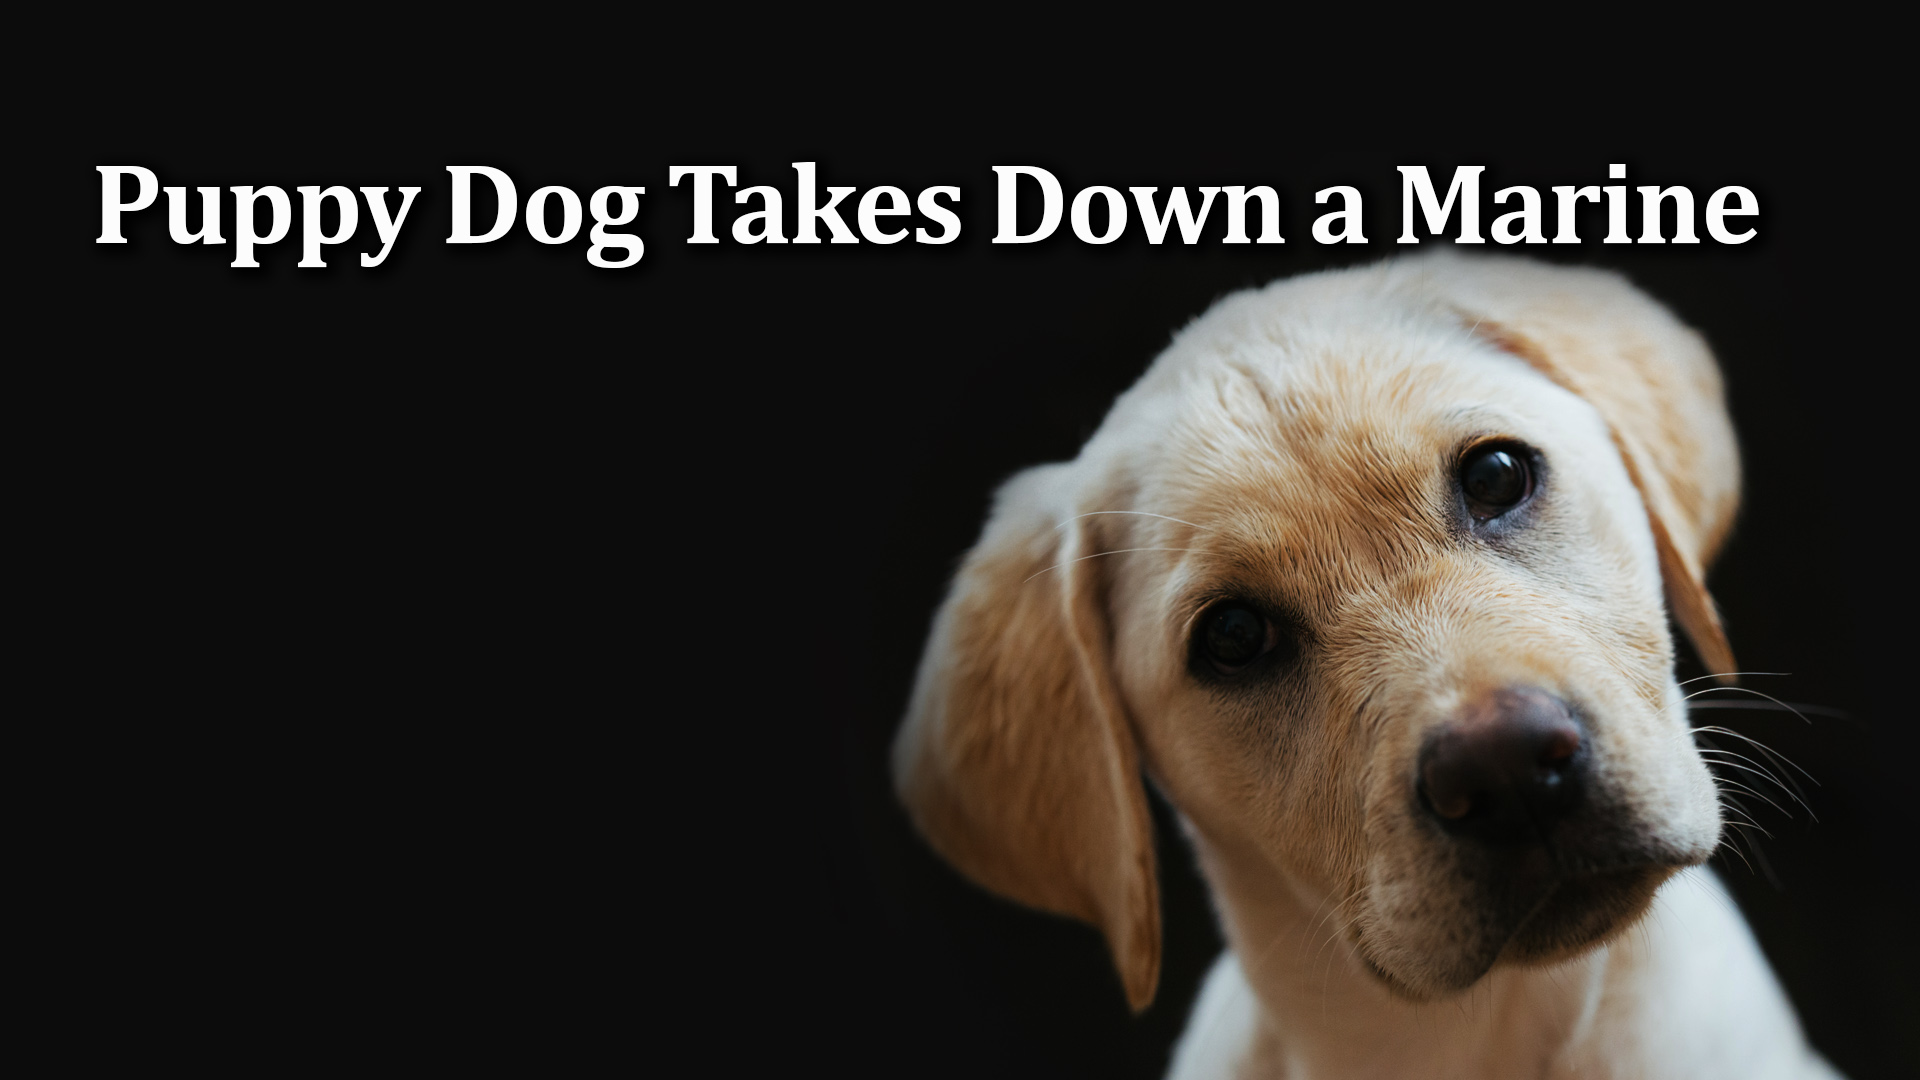 04-05-22 HUMOR Puppy Dog Takes Down Marine